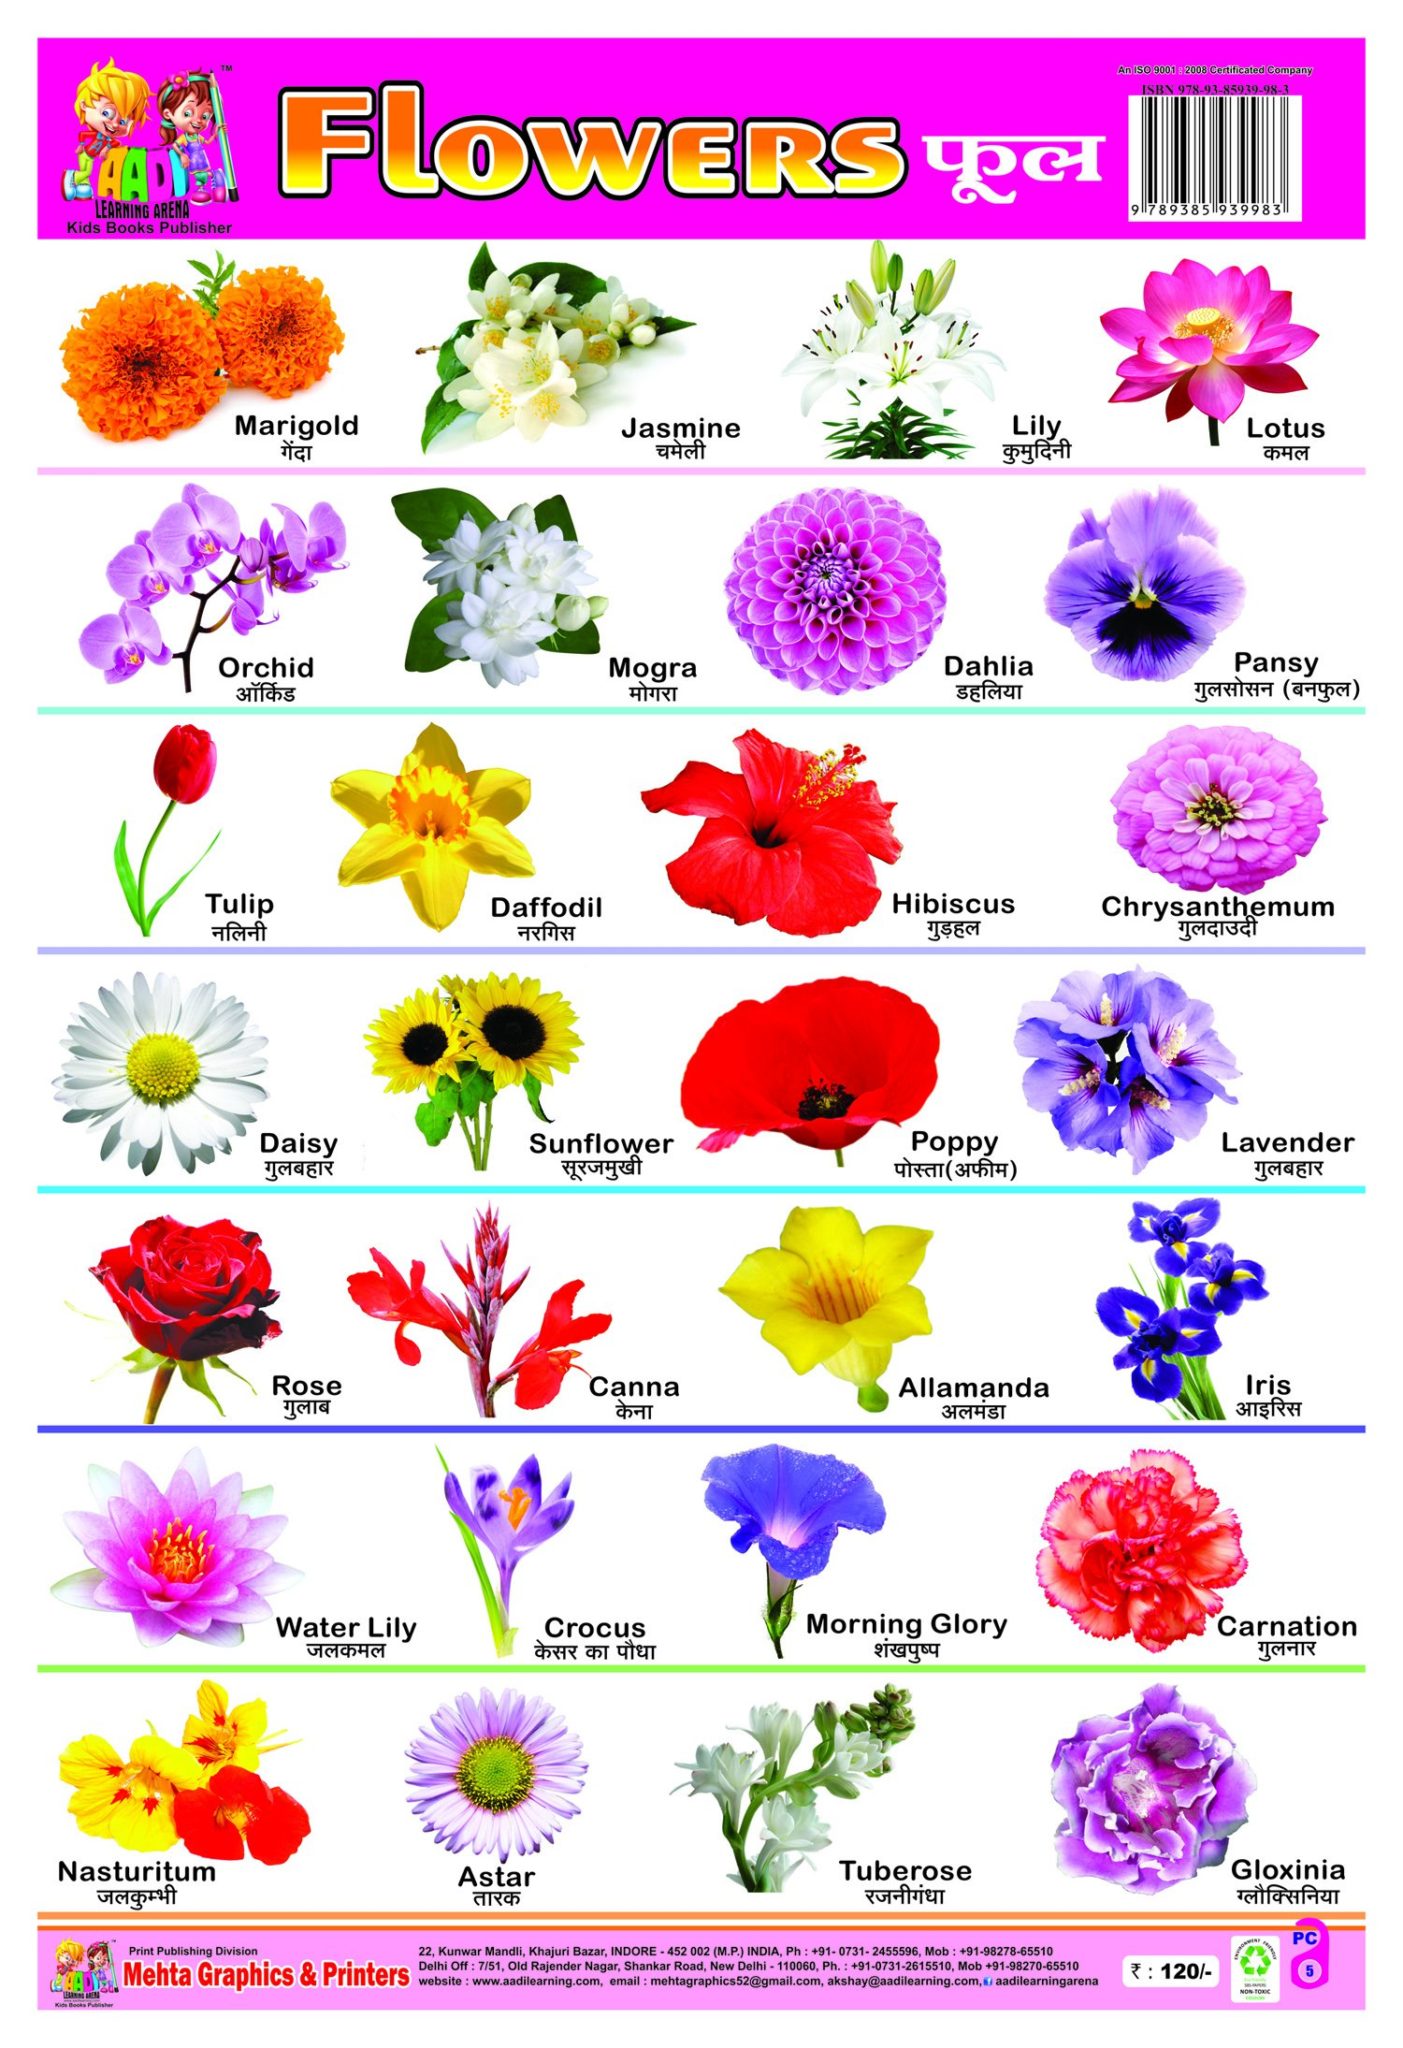 List of Flowers Name in Hindi and English PDF - फूलों के नाम